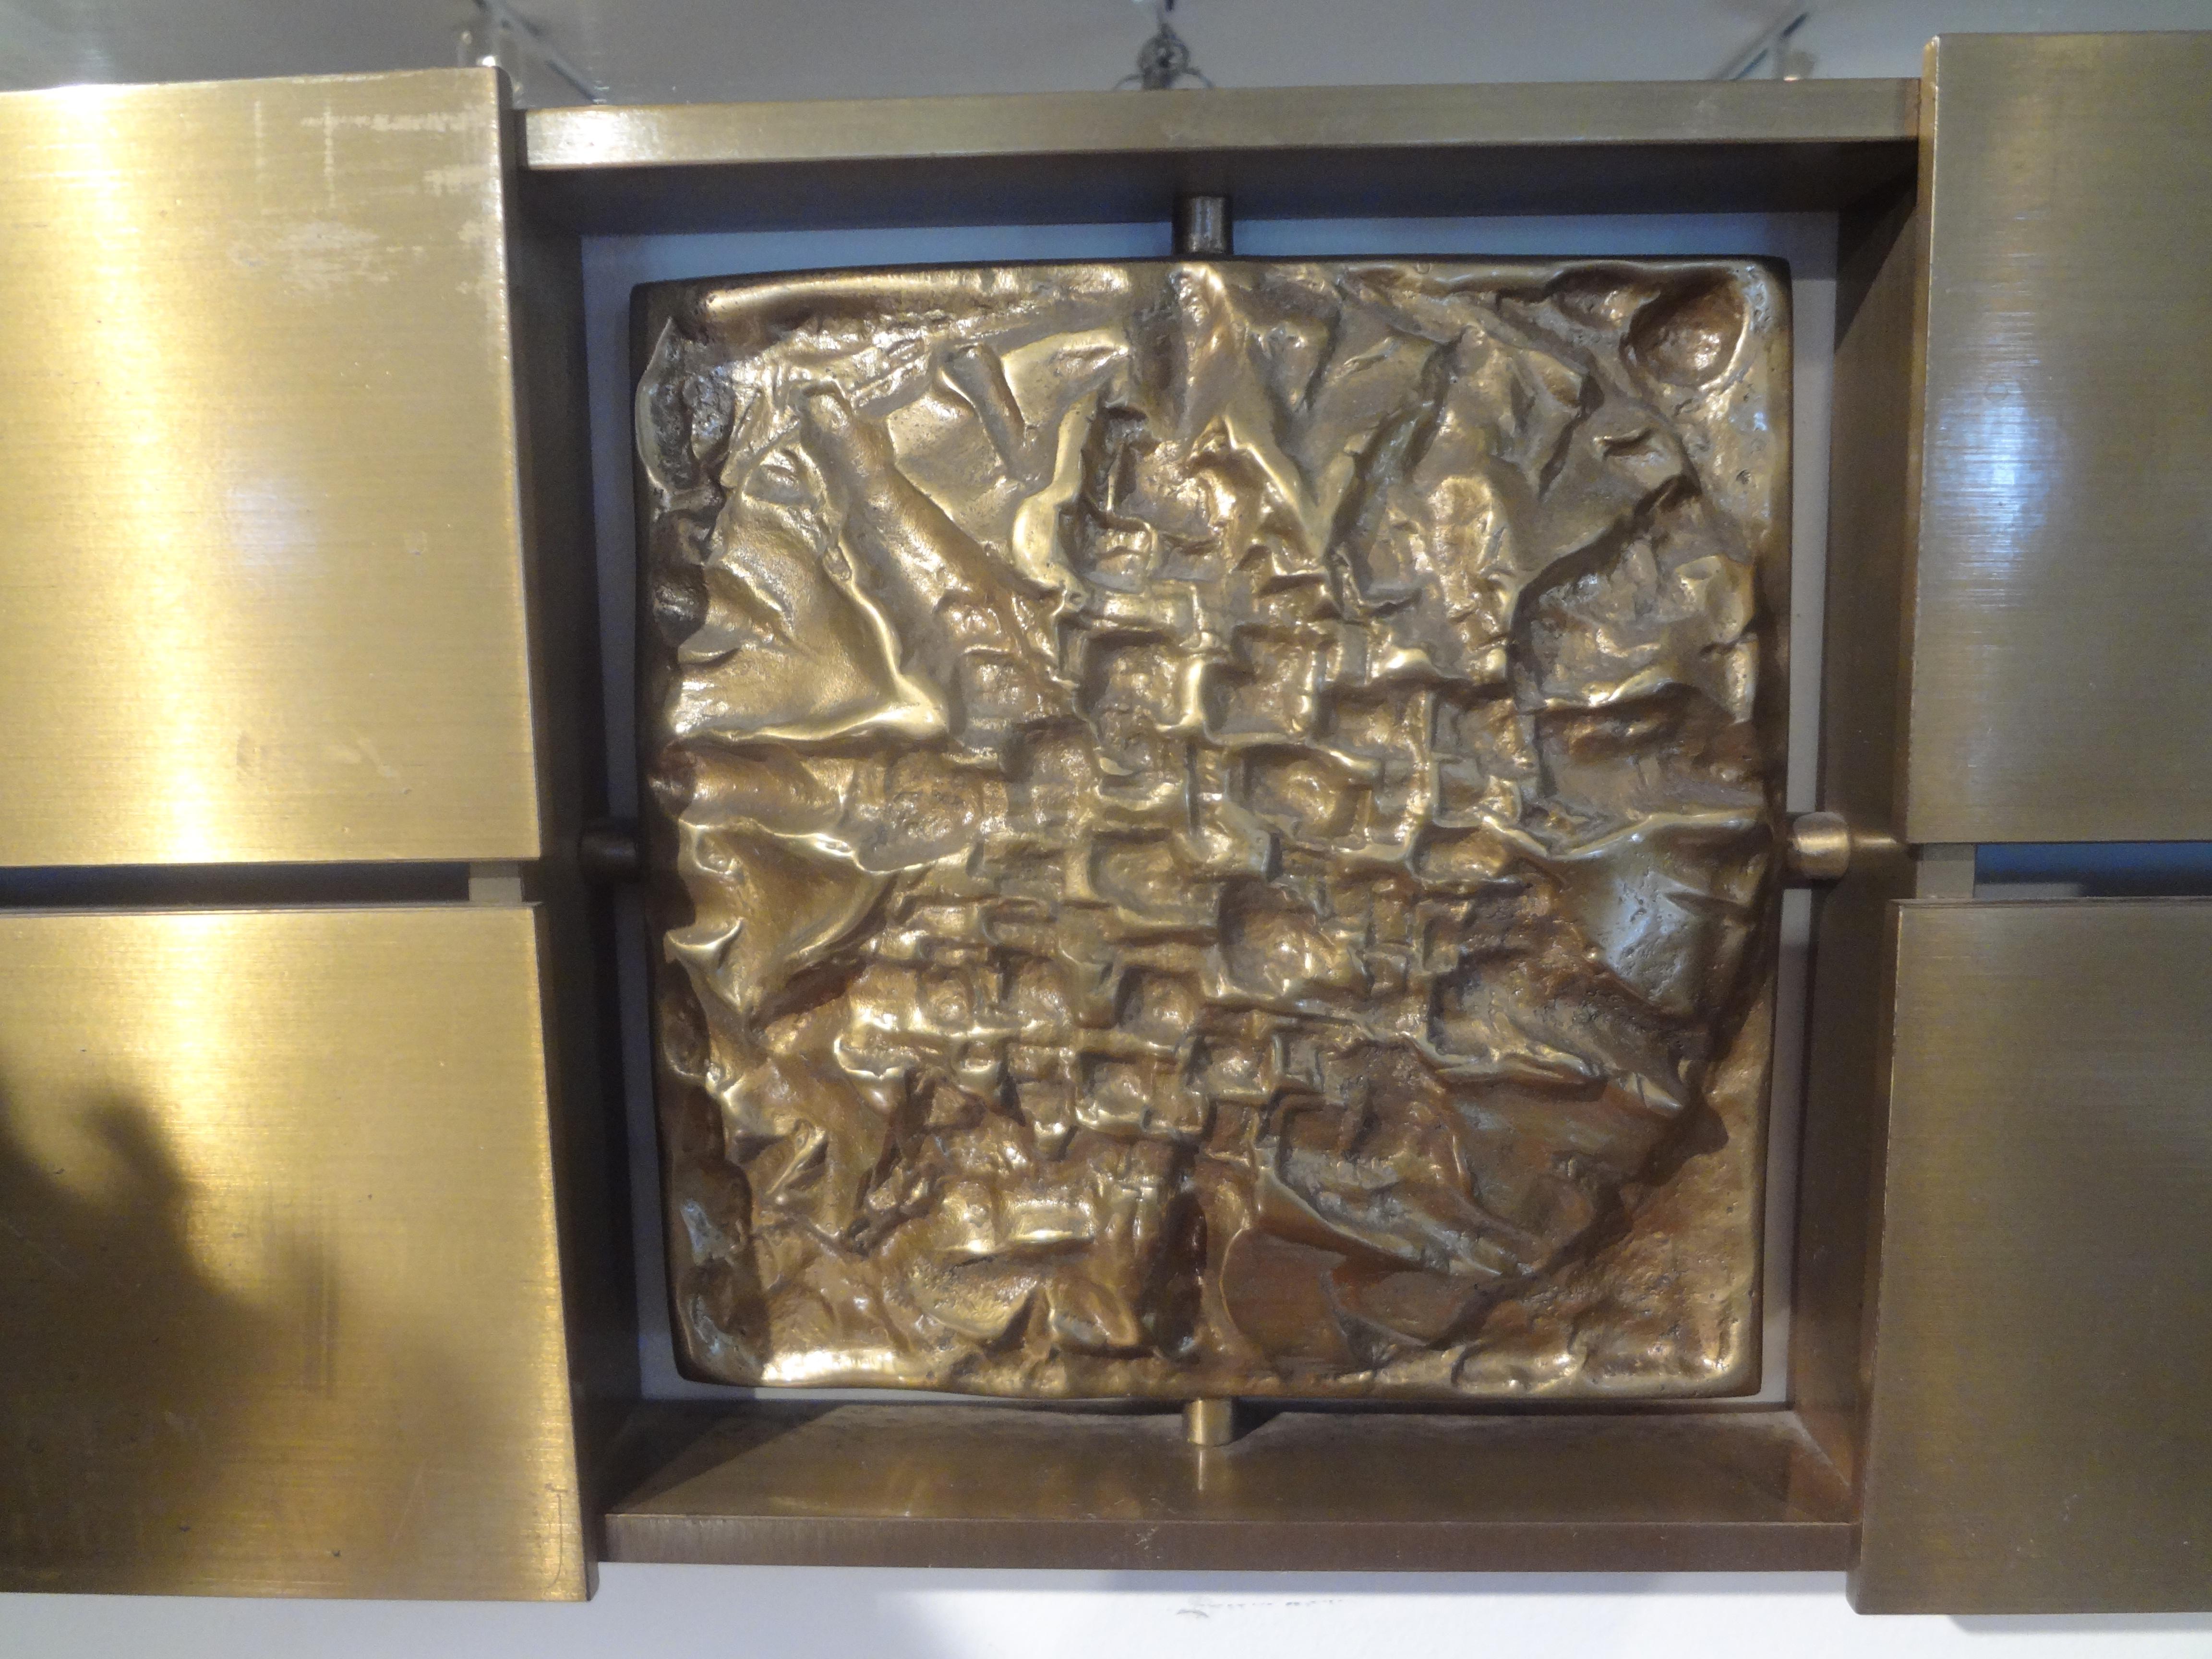 Italian Brutalist sculptural brass mirror by Luciano Frigerio.
Handsome Italian midcentury Brutalist mirror designed by Luciano Frigerio with smoked grey mirror, circa. 1970.
Simple stunning Italian design!